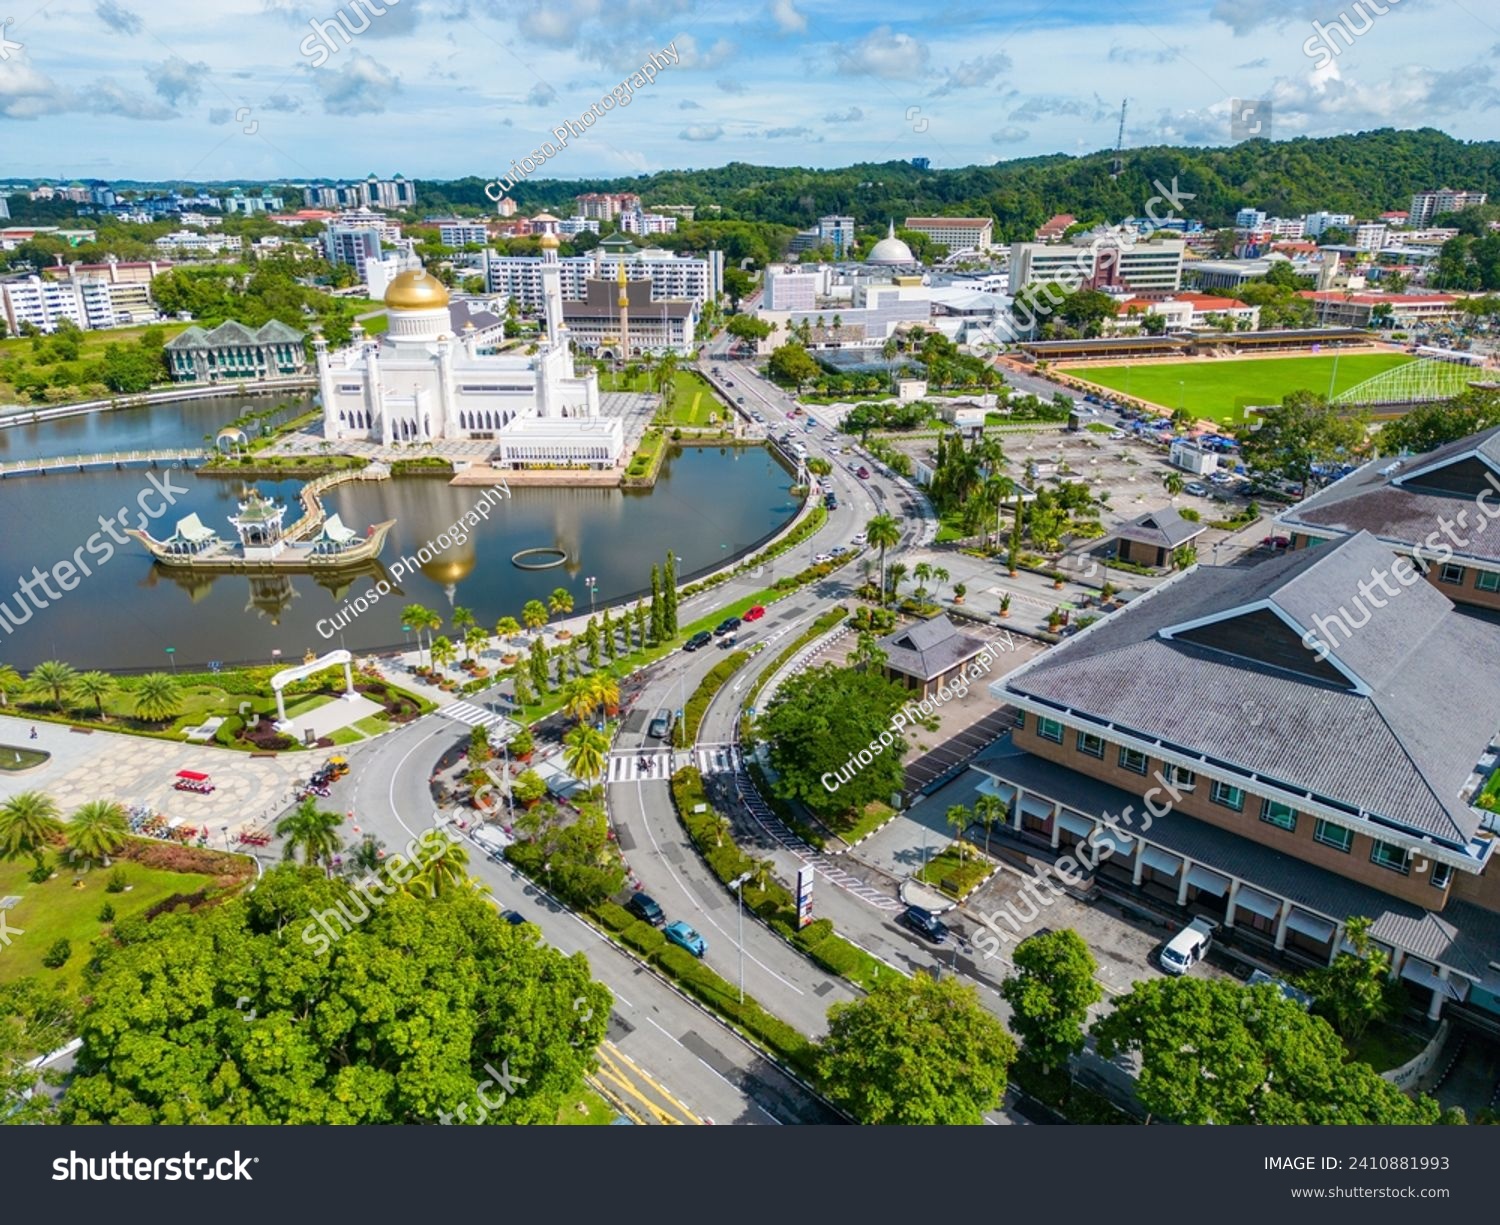 Sultan Omar Ali Seyfeddin Mosque Aerial View. Bandar Seri Begawan, the capital of Brunei Darussalam. Borneo. Southeast Asia  #2410881993